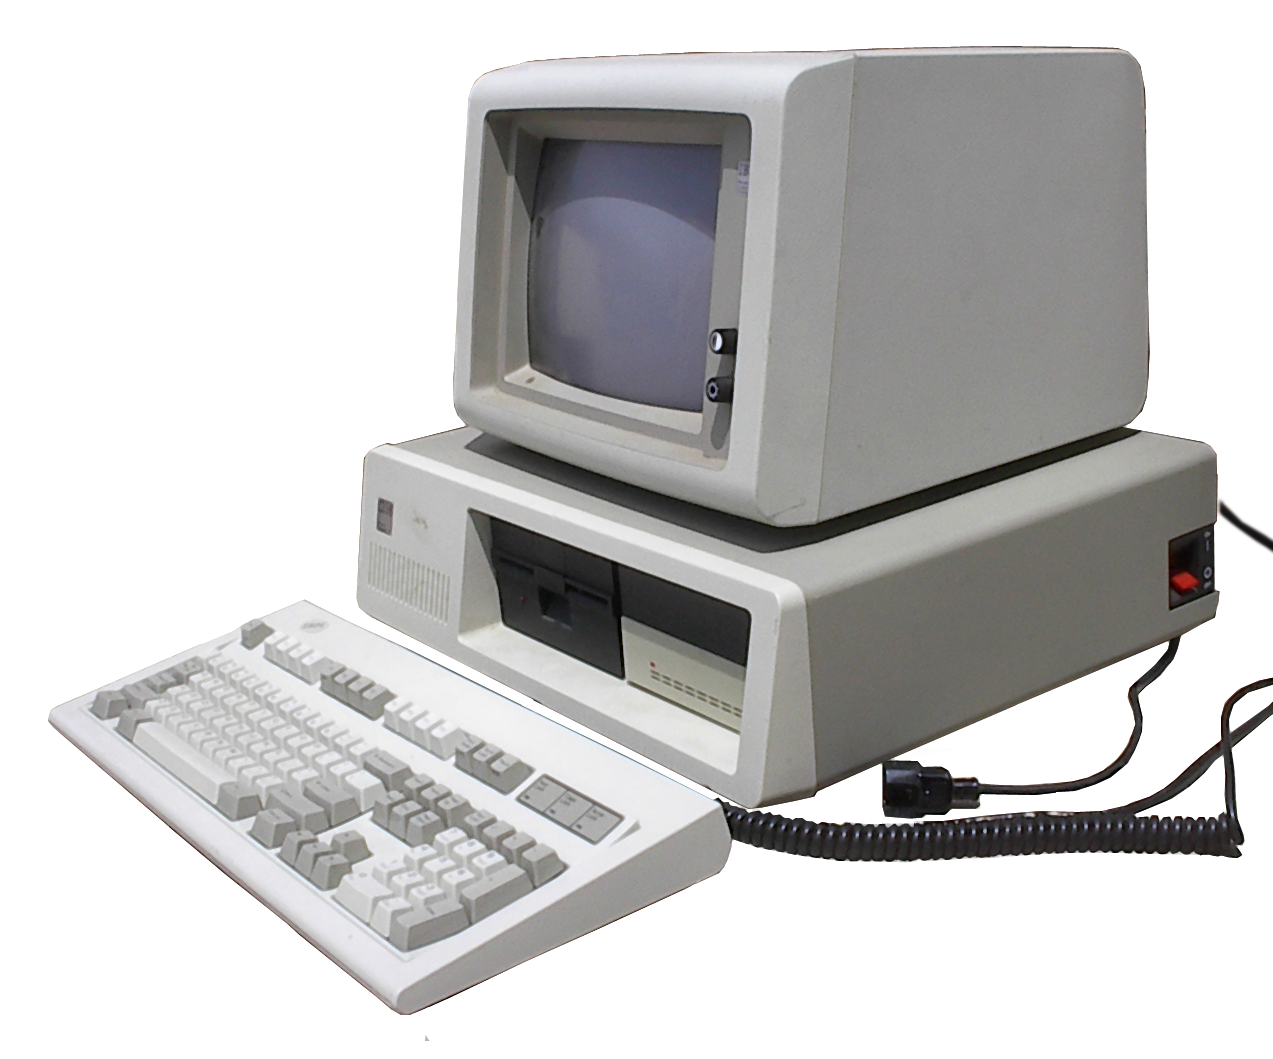 Ibm совместимые. Персональный компьютер IBM PC. IBM PC 5150. IBM PC 330. Первый персональный компьютер IBM.